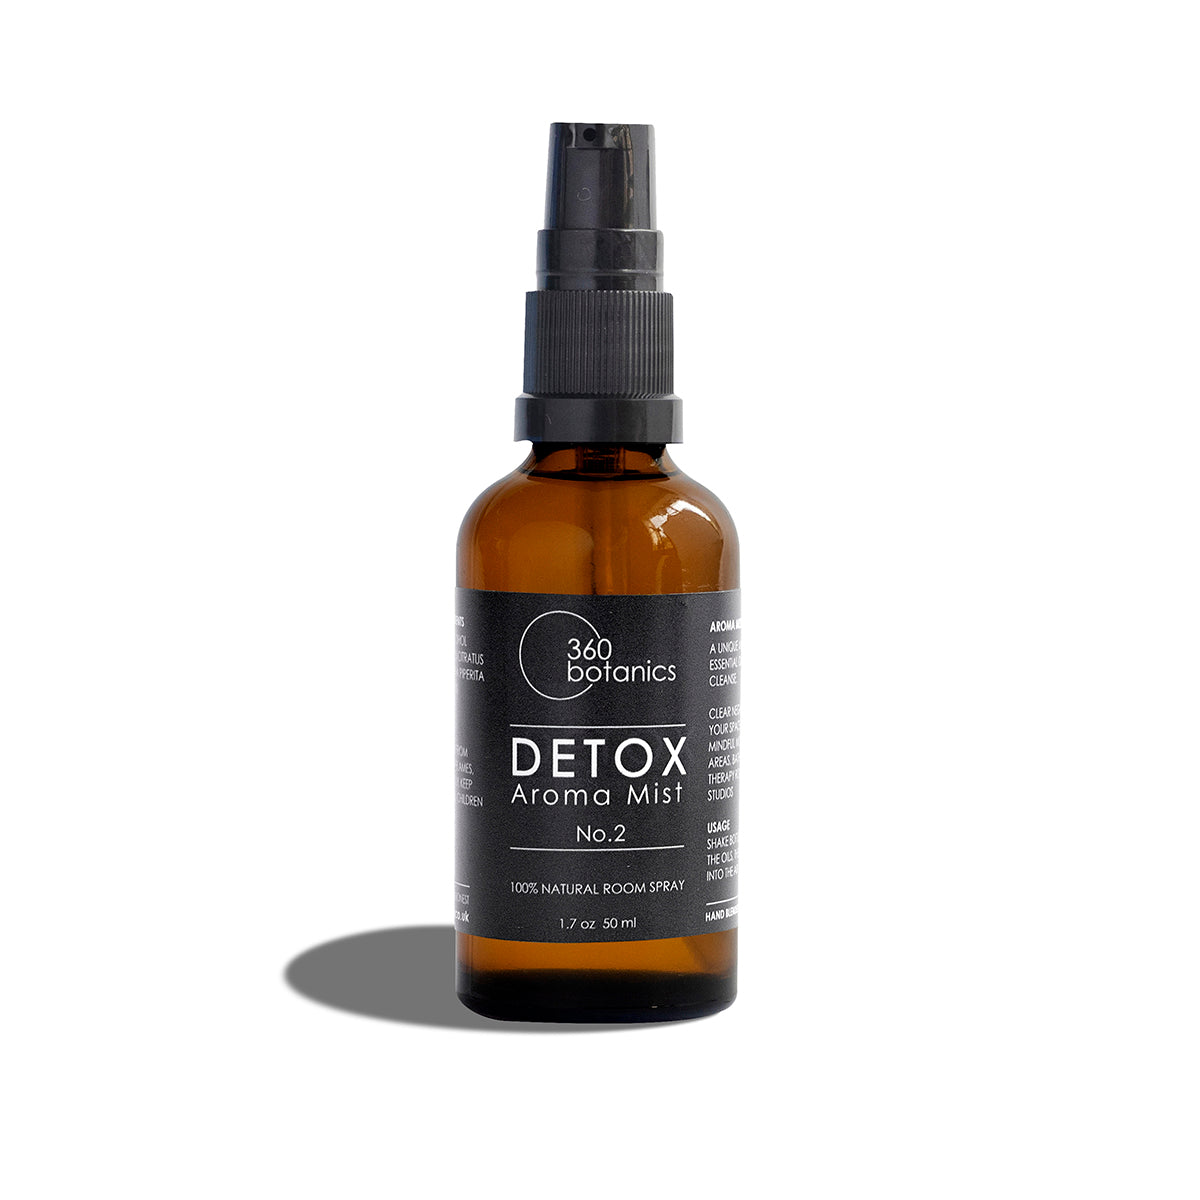 image of detox aroma mist spray